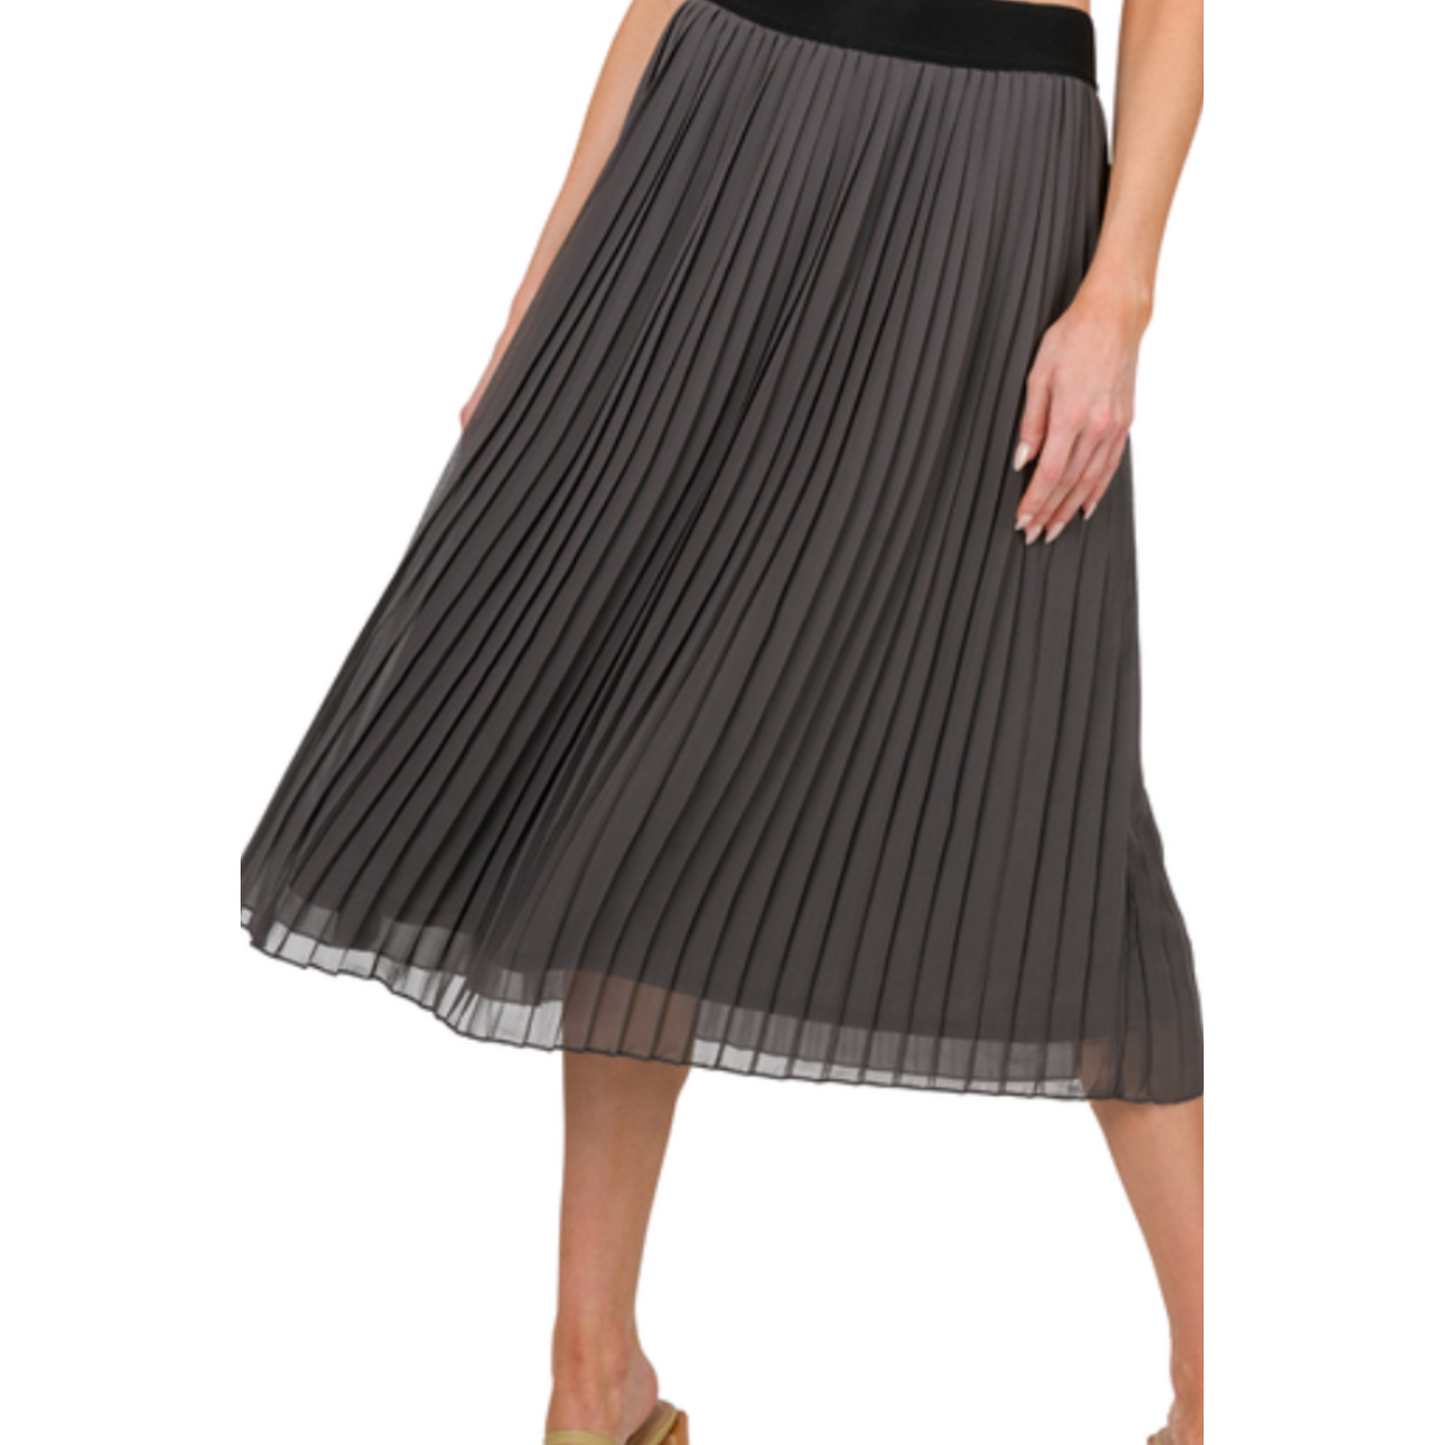 Cheri Chiffon Pleated Skirt - Ash Grey